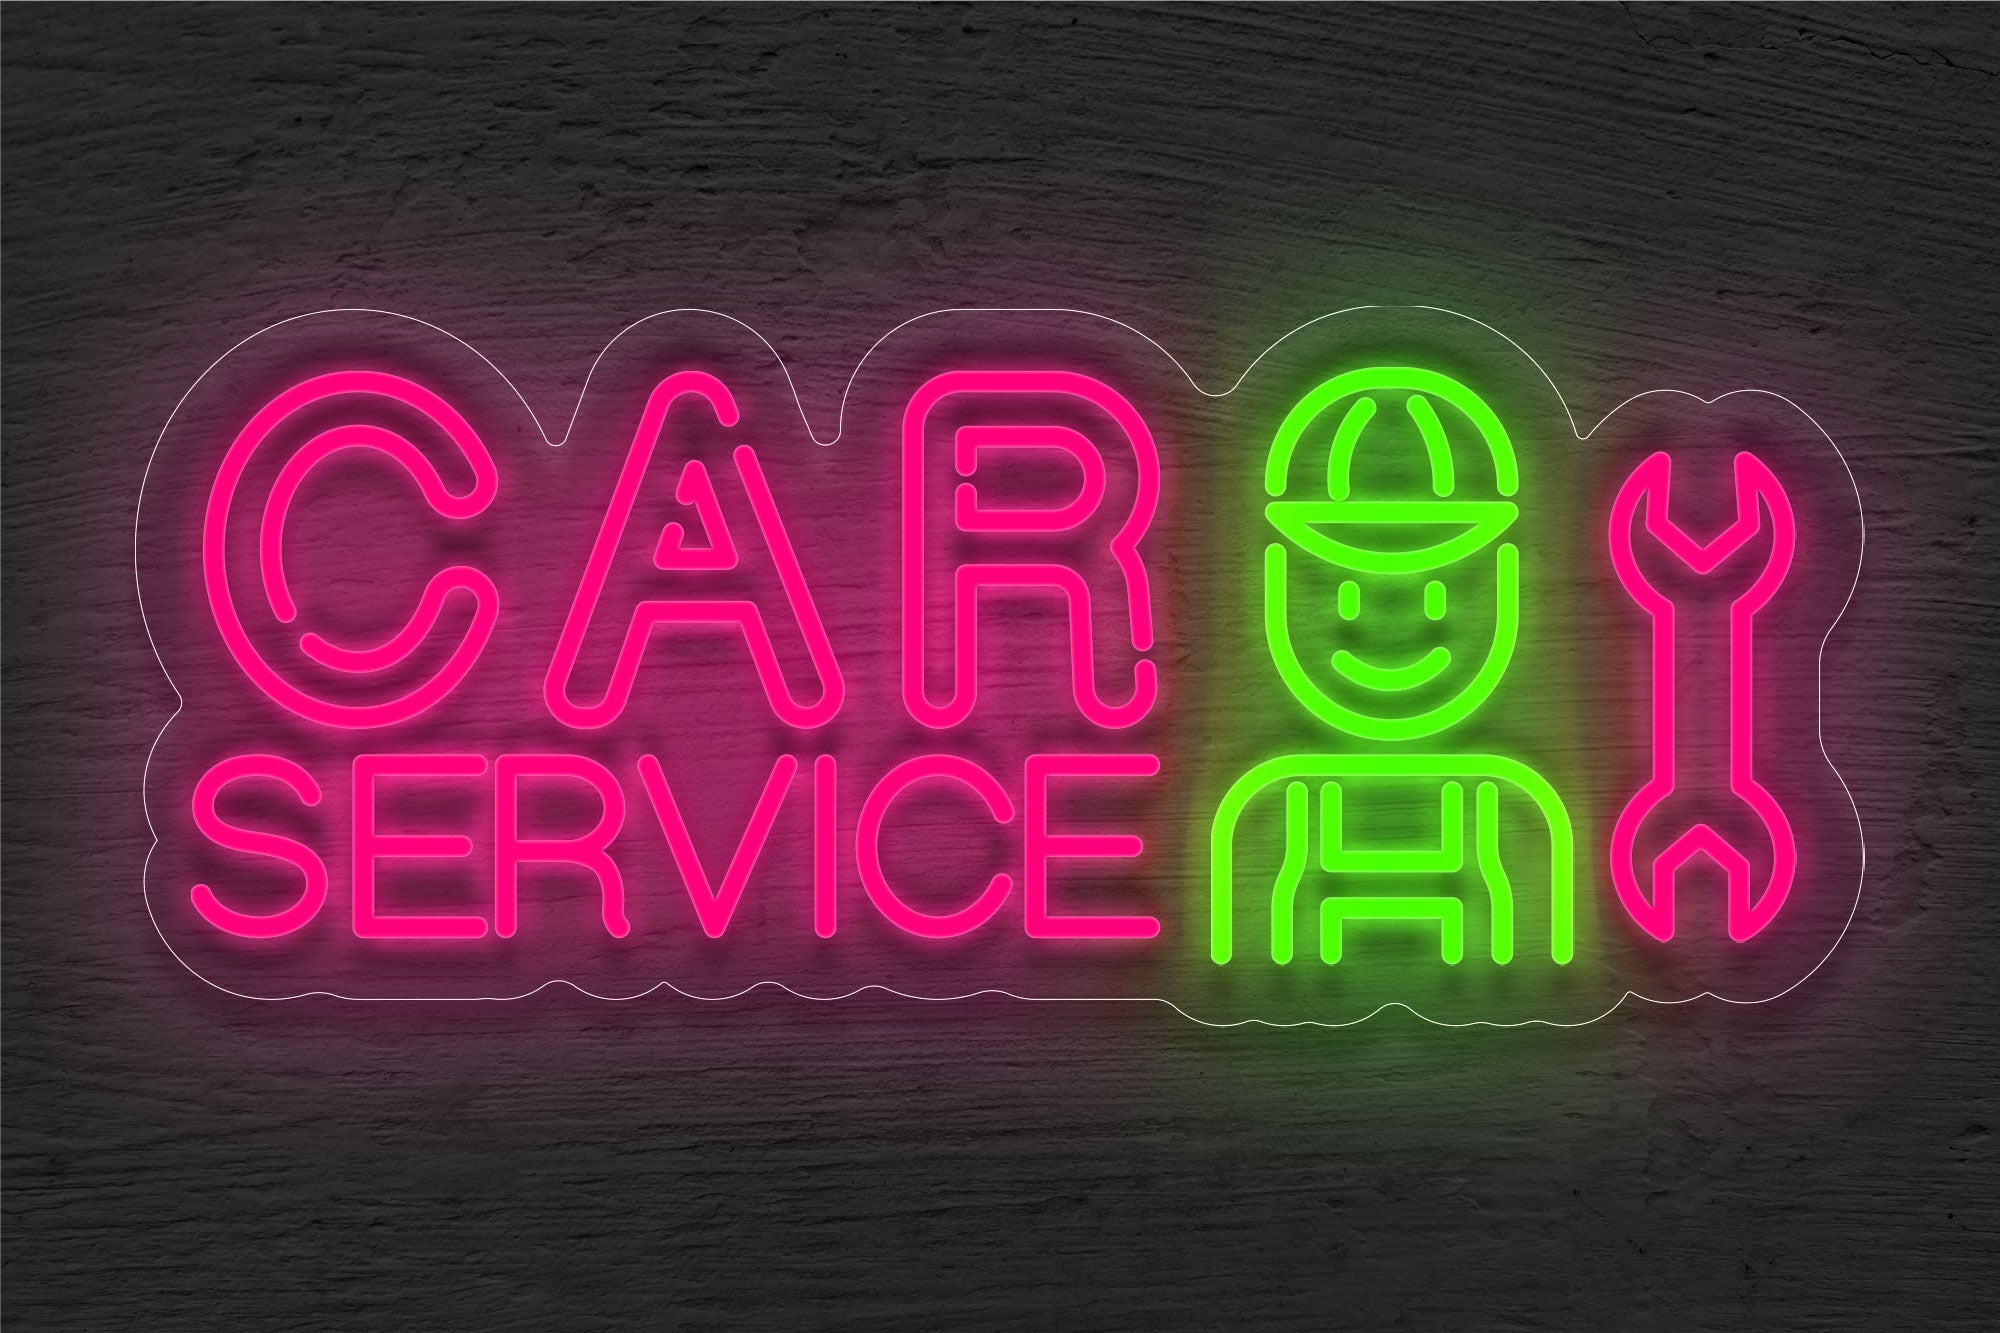 "Car Service" Logo LED Neon Sign